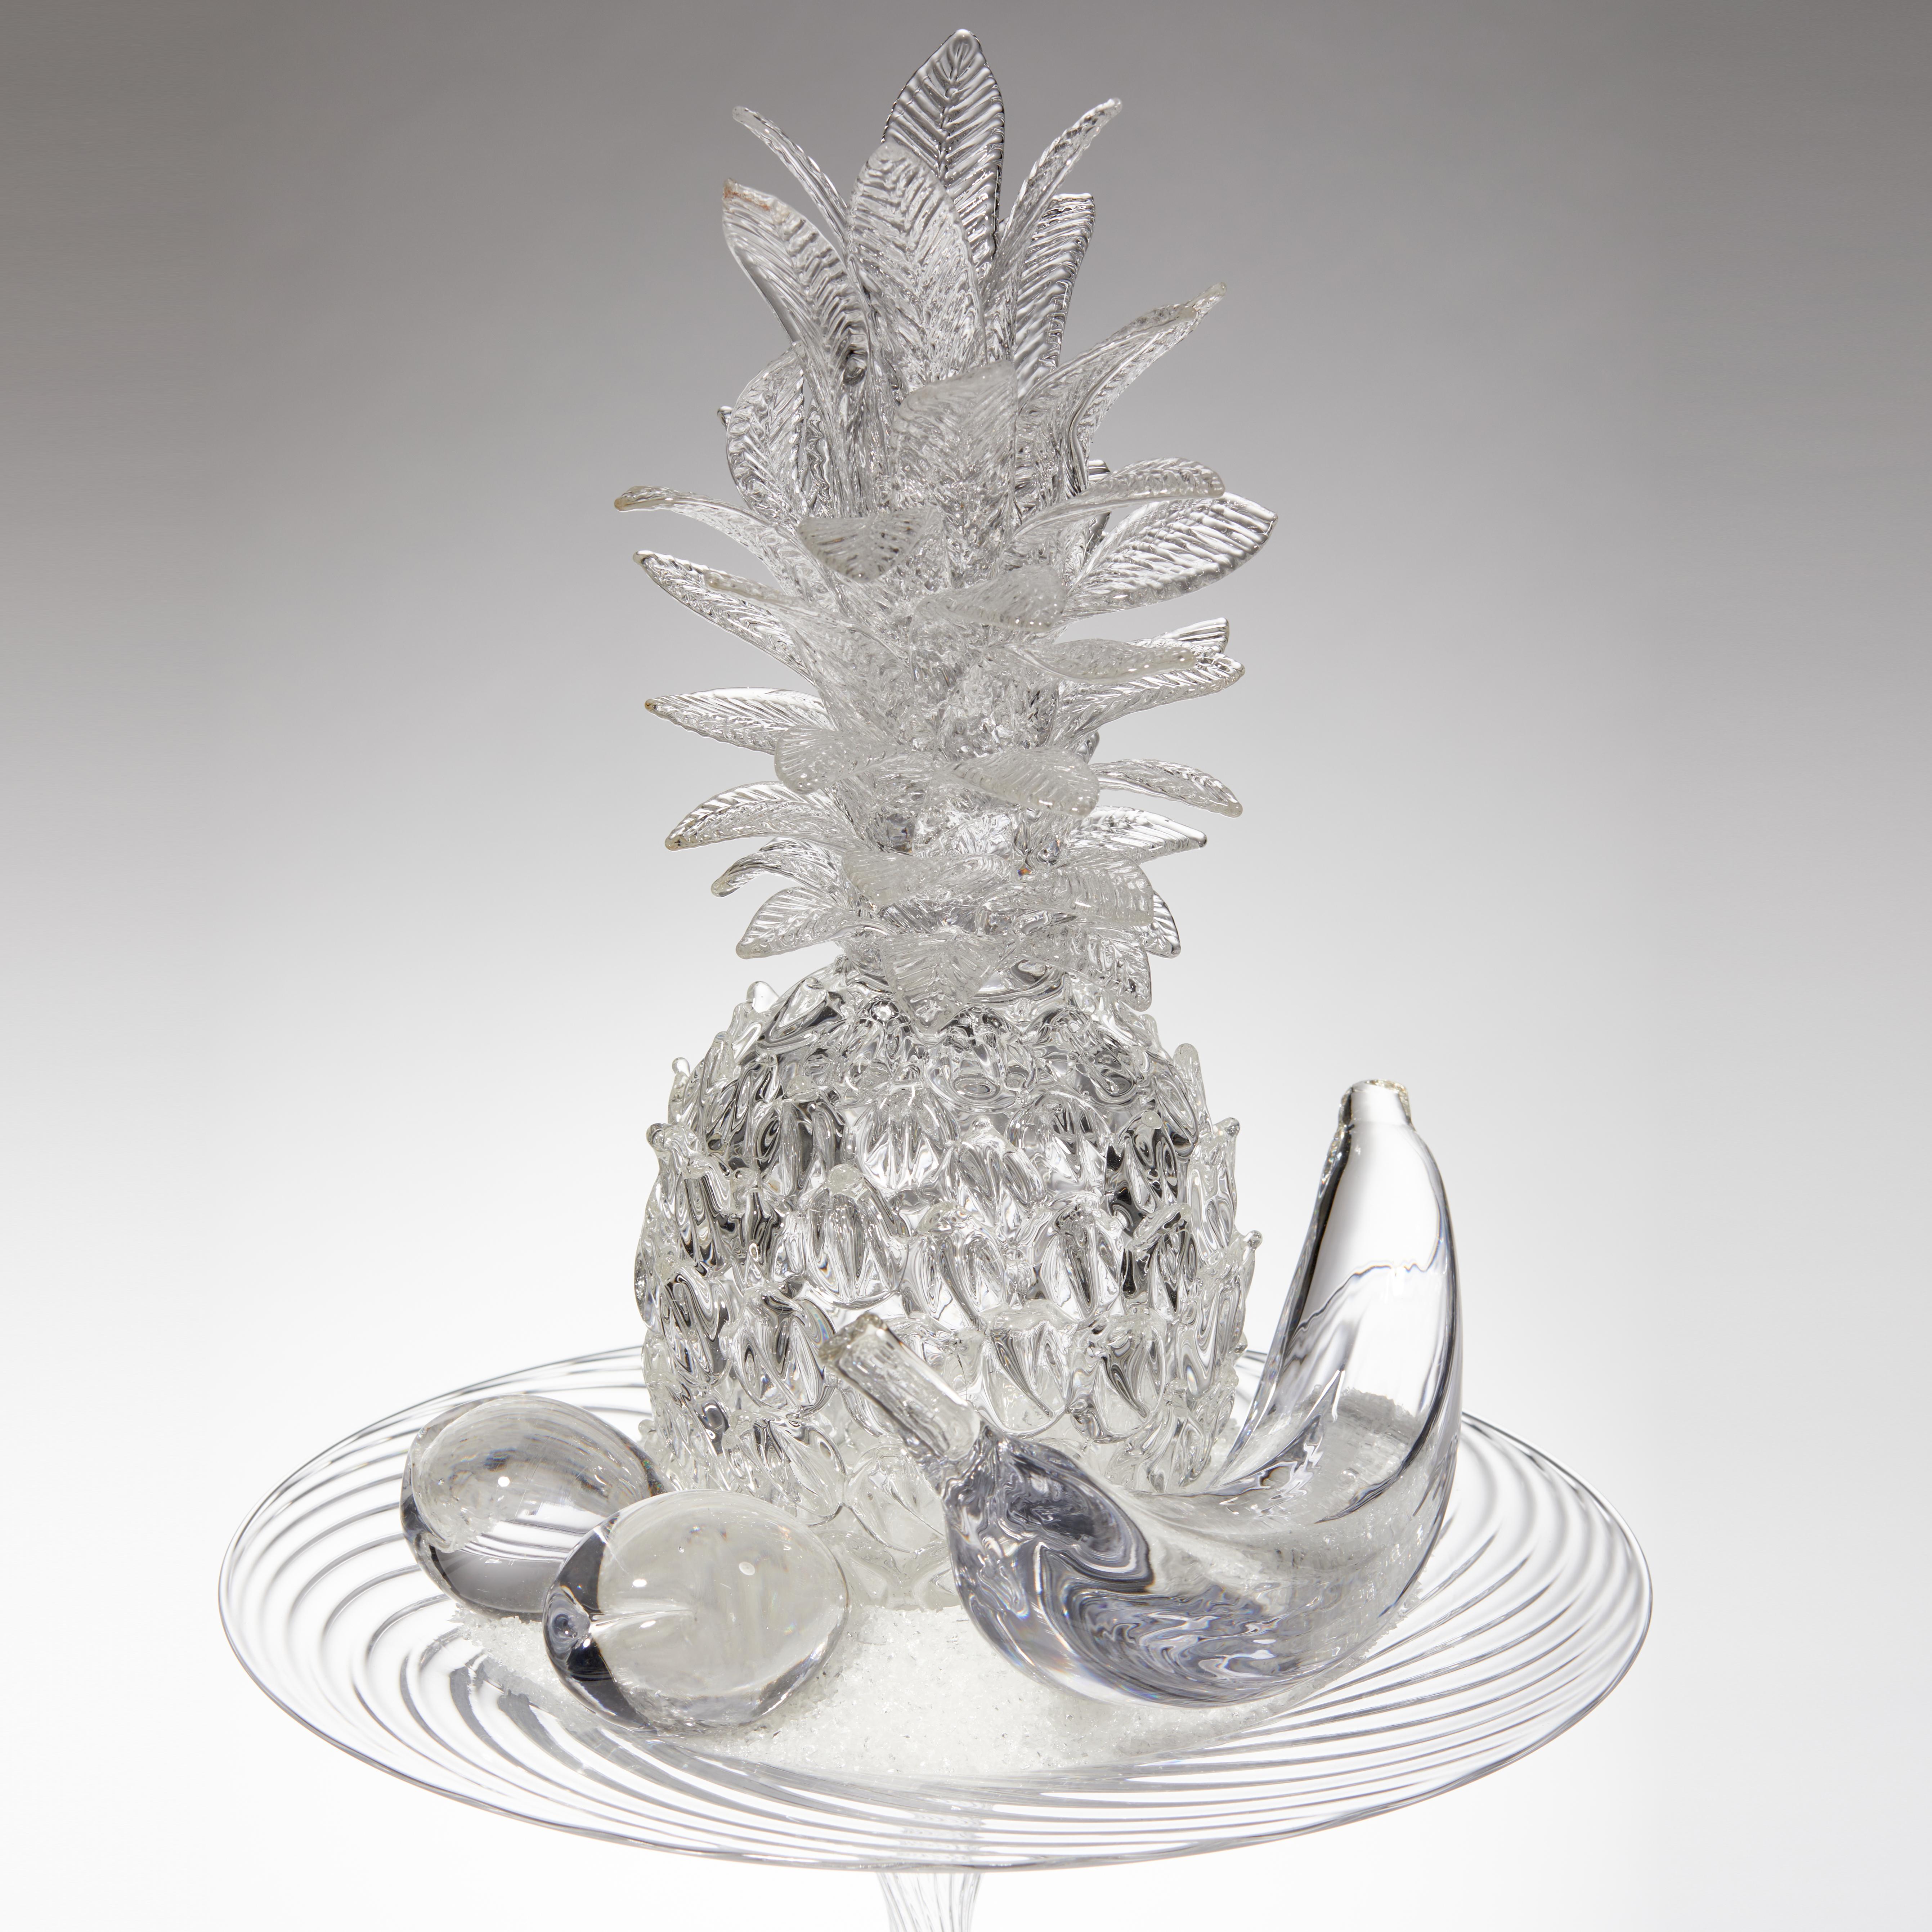 Organic Modern AnanasMusaPrunus, a Glass Still Life Installation Art Work by Elliot Walker For Sale